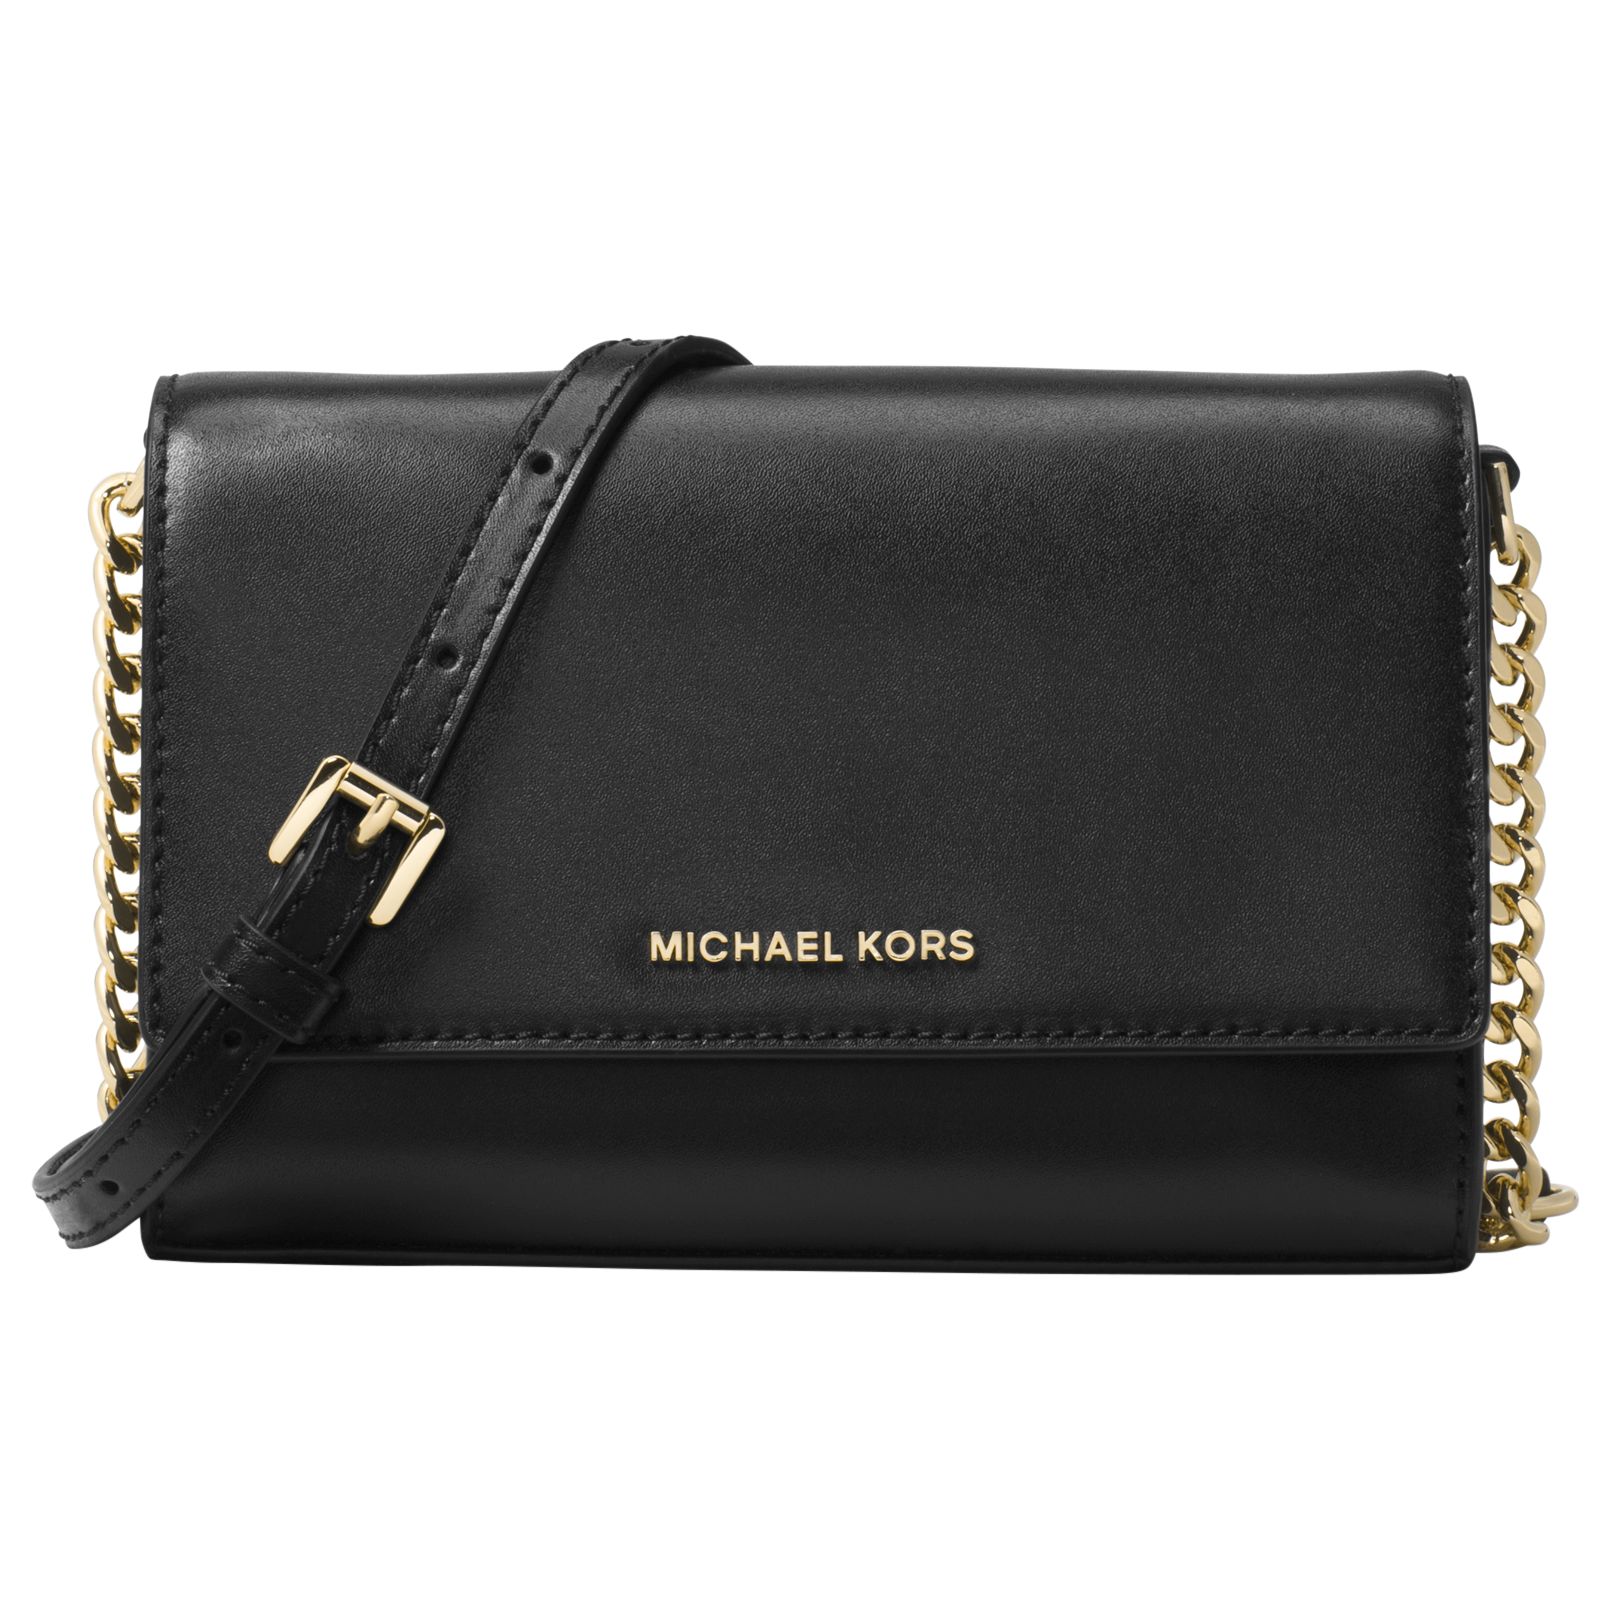 michael kors black clutch purse